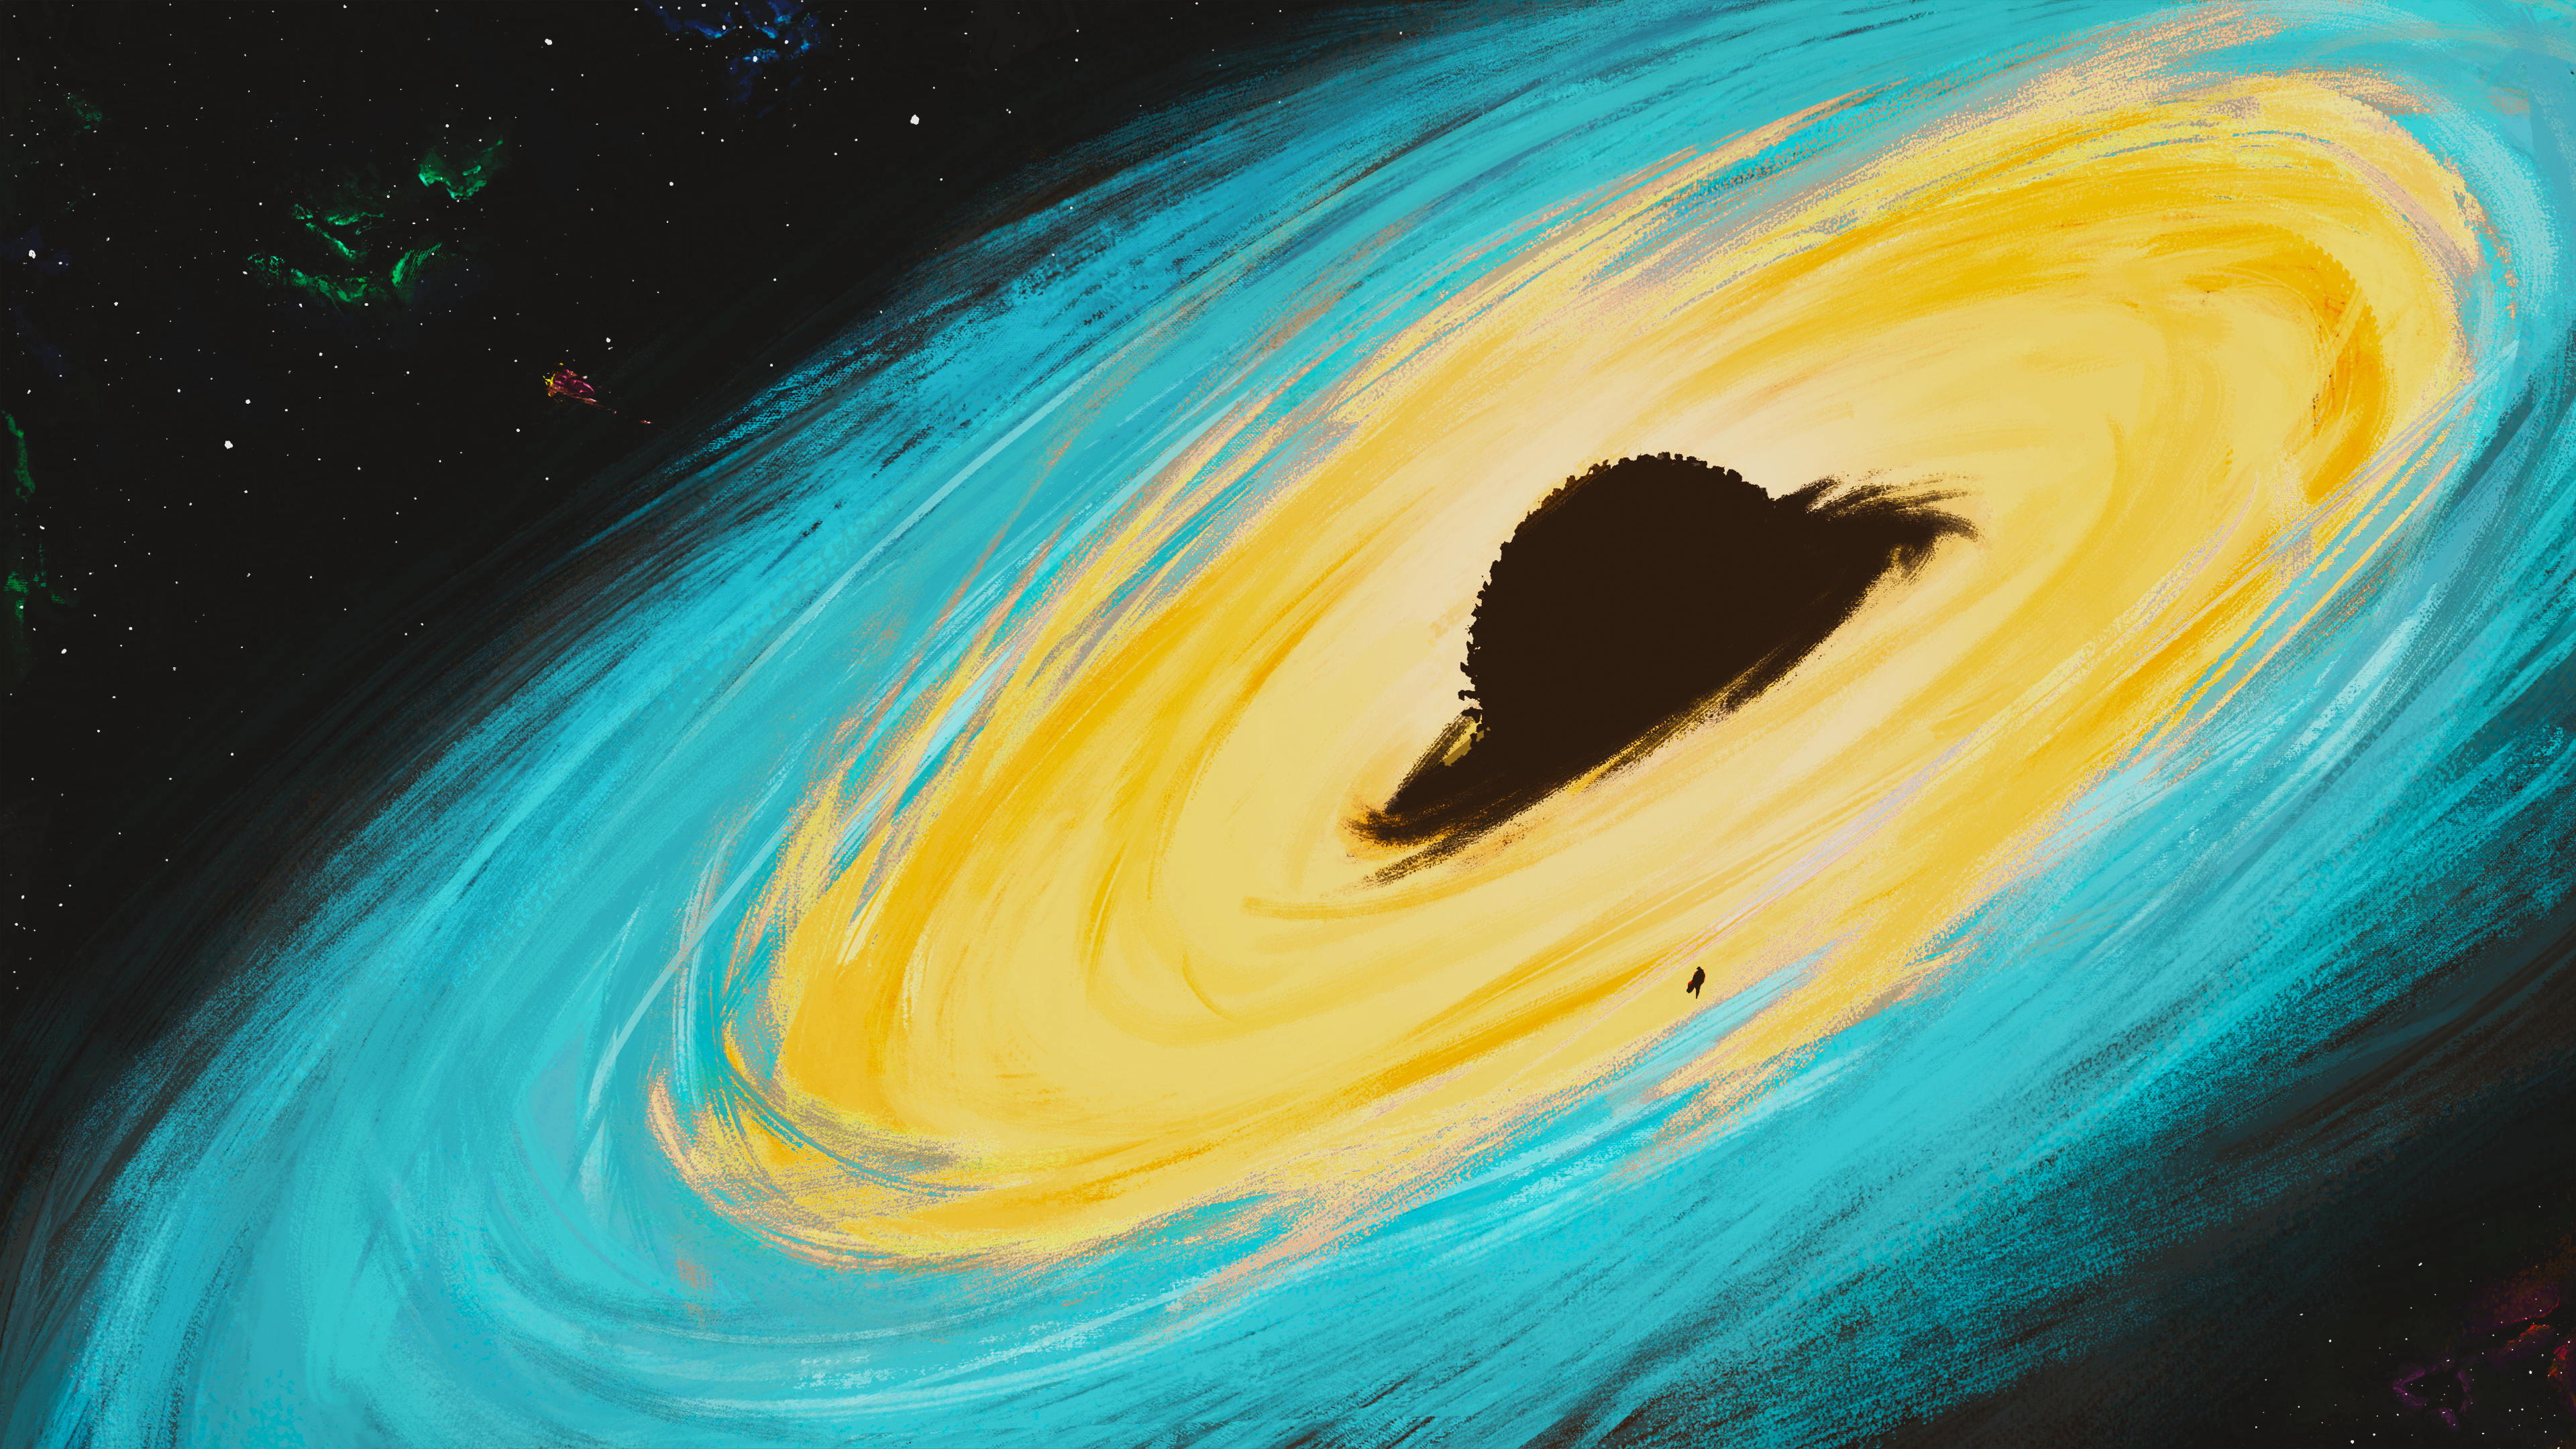 General 3840x2160 artwork Ameur Makhloufi painting black holes astronaut space yellow cyan science fiction event horizon space art omni-man